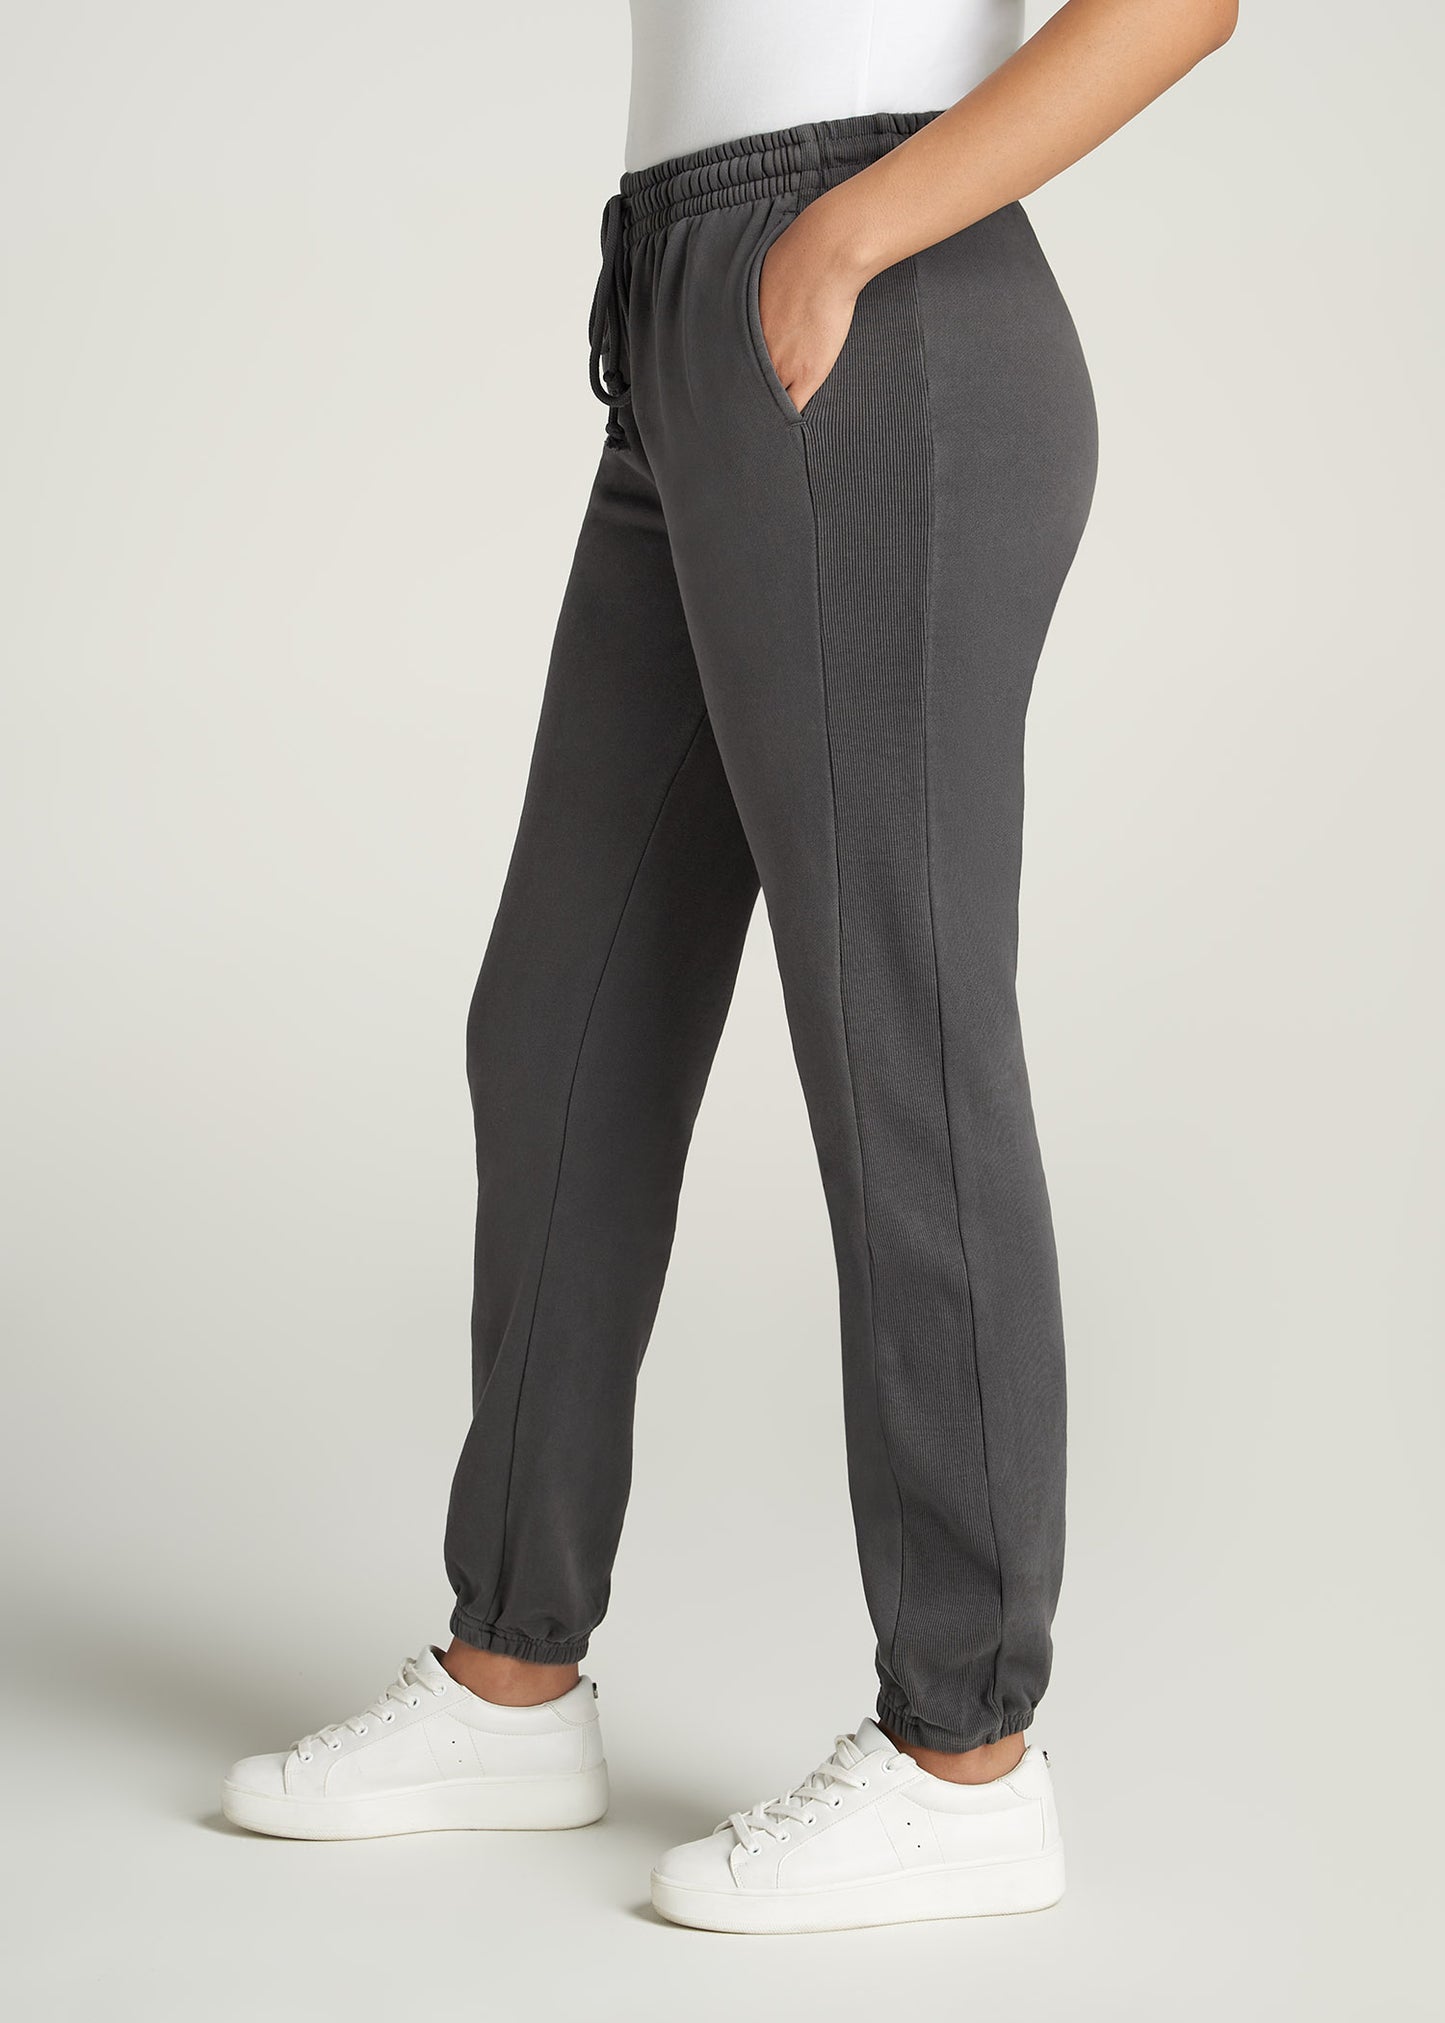 GenesinlifeShops Canada - Black Sweatpants with logo Versace - SJYP Track  Pants for Women